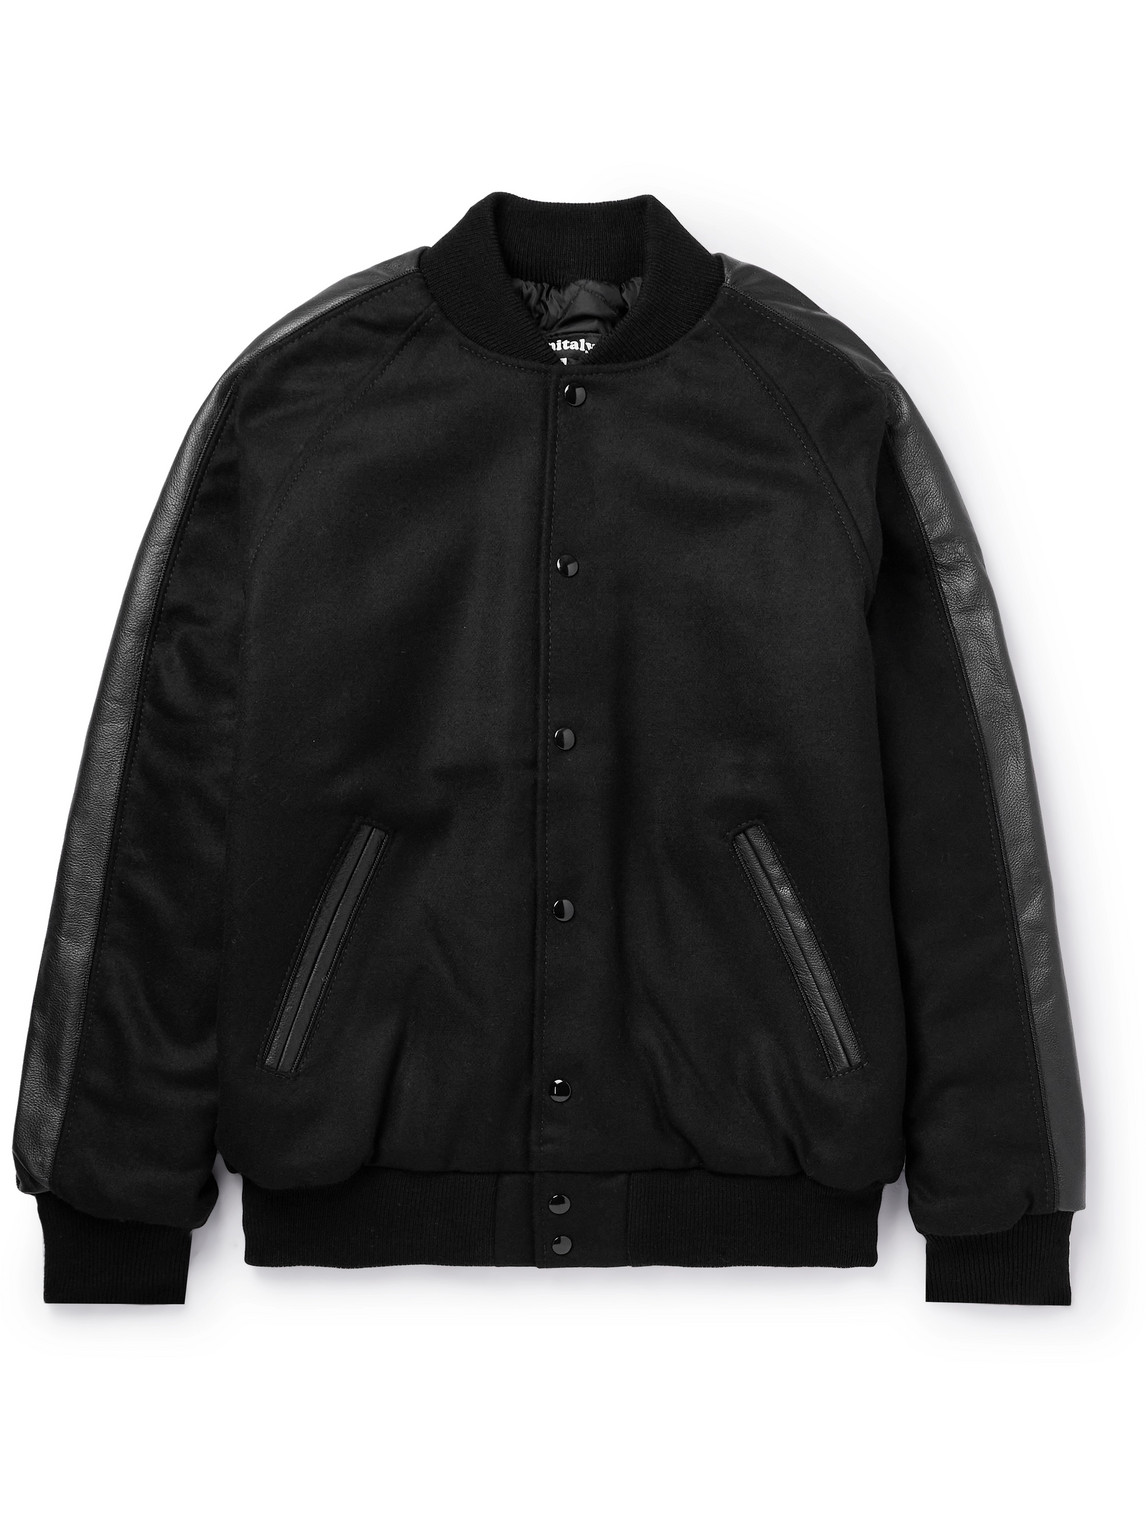 Monitaly - Leather-Trimmed Wool-Blend Varsity Jacket - Men - Black - S von Monitaly